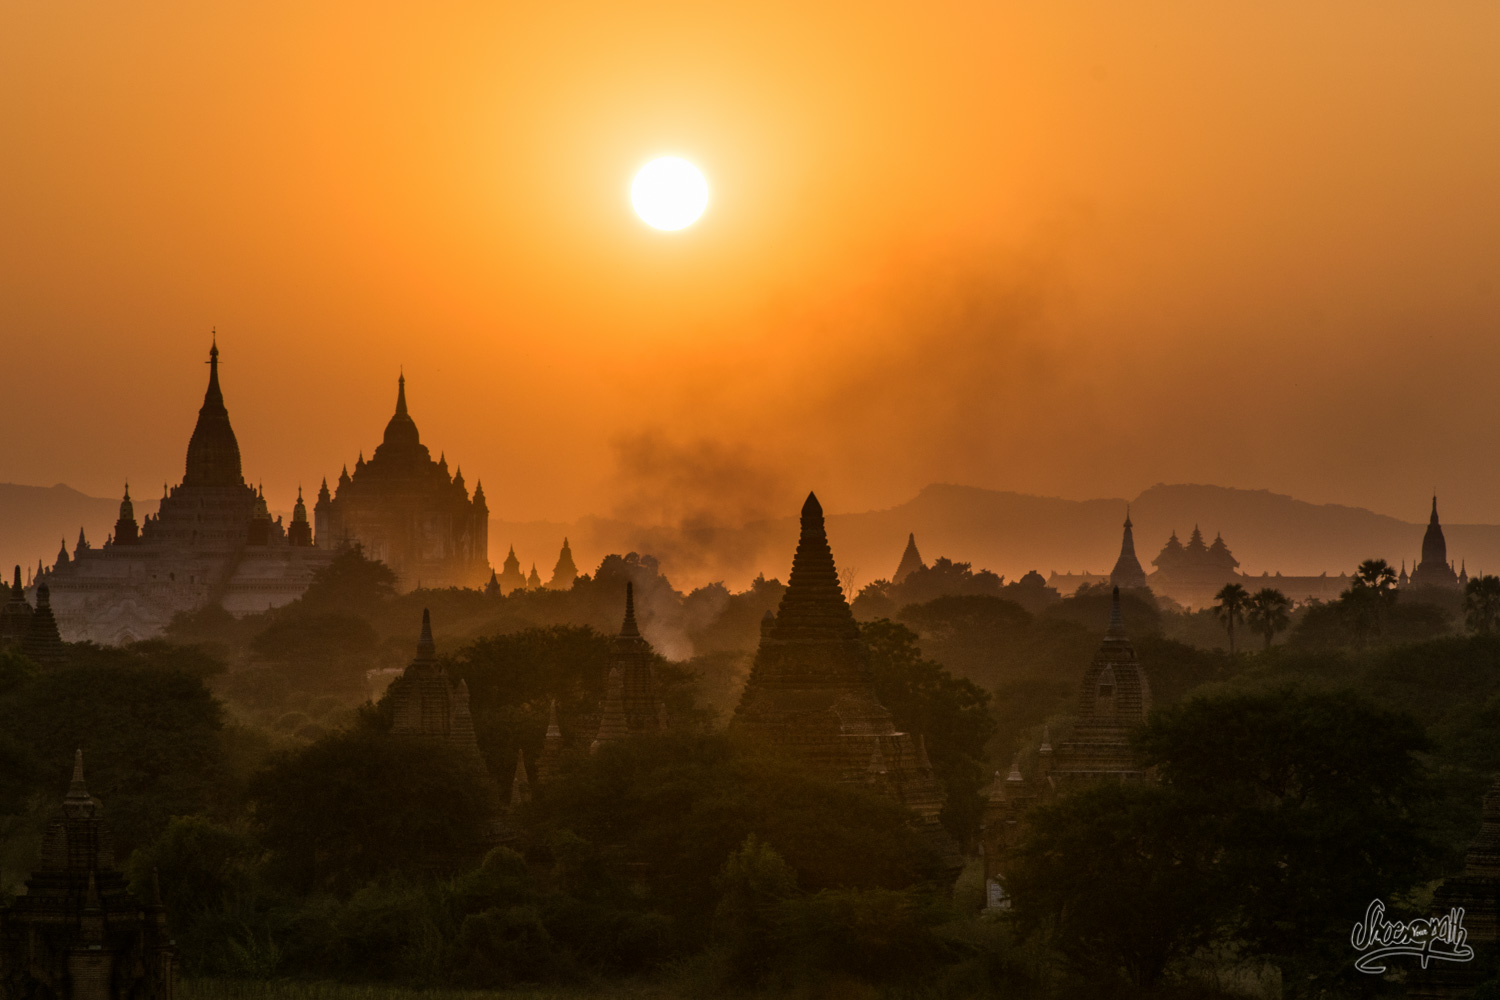 Flamming sunset over Bagan's pagodas